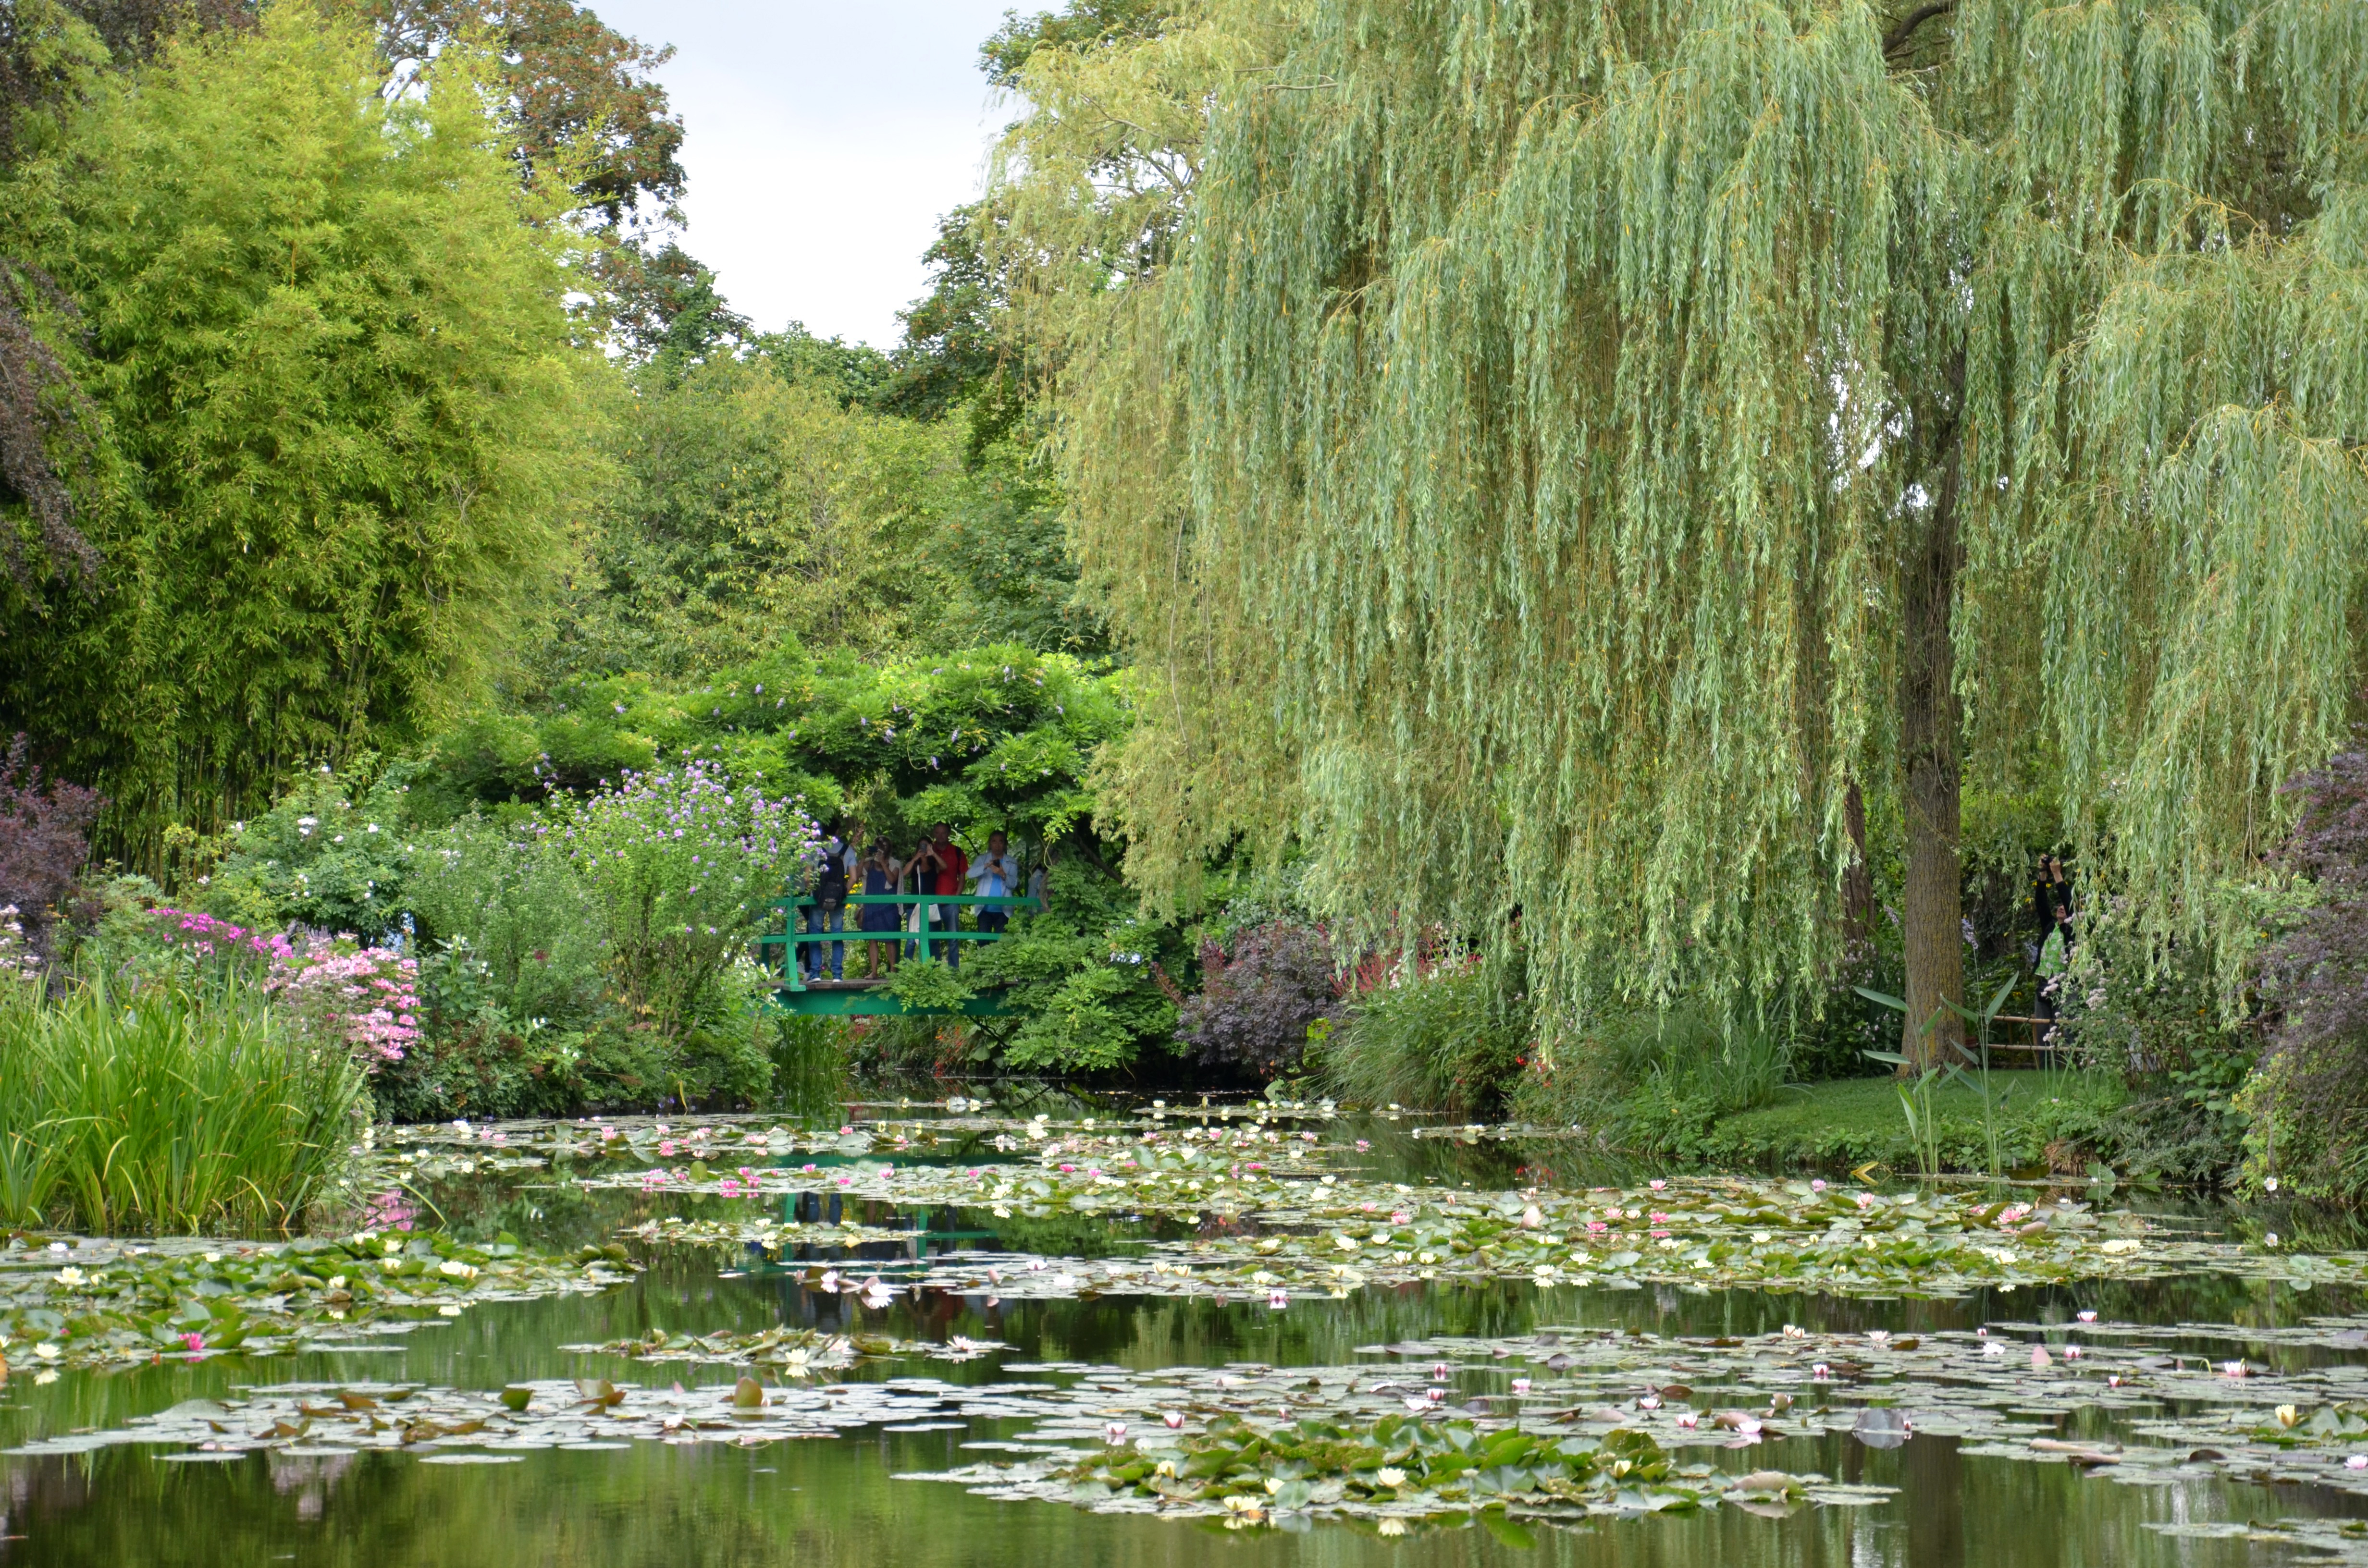 Monet garden, Giverny, France